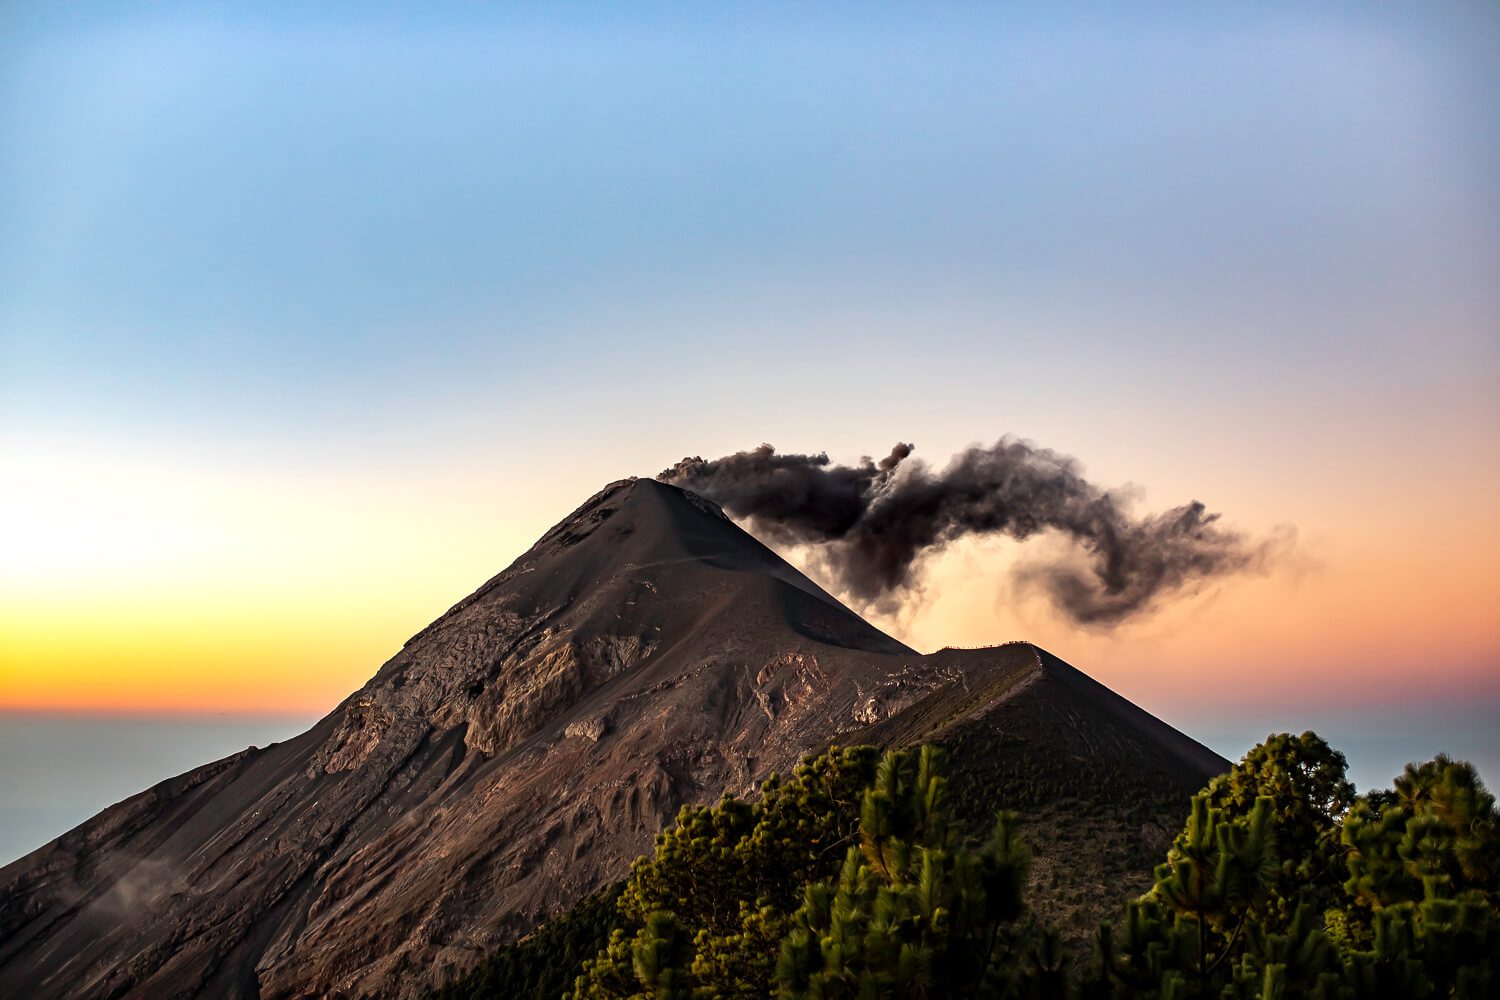 Sunrise atop Acatenango watching Fuego erupt